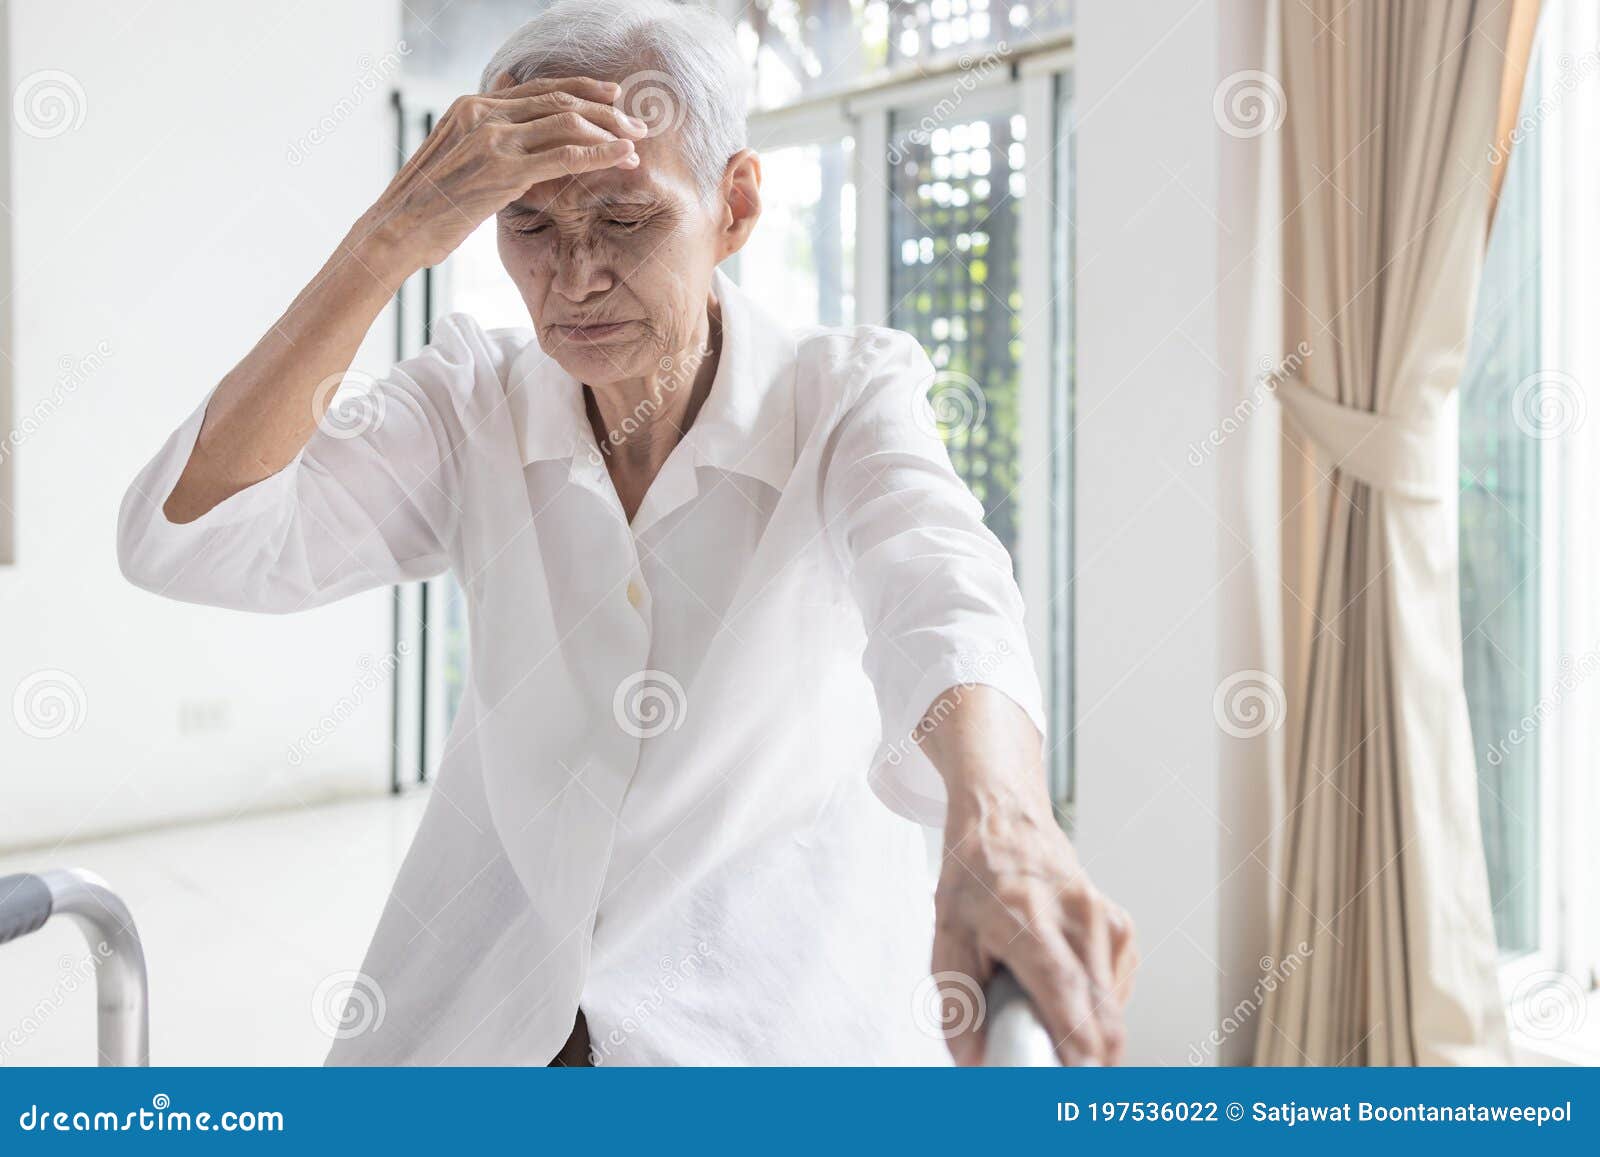 exhausted asian senior woman is touching her head with hand,symptoms of vertigo illness,loss balance dizzy,meniereÃ¢â¬â¢s disease,